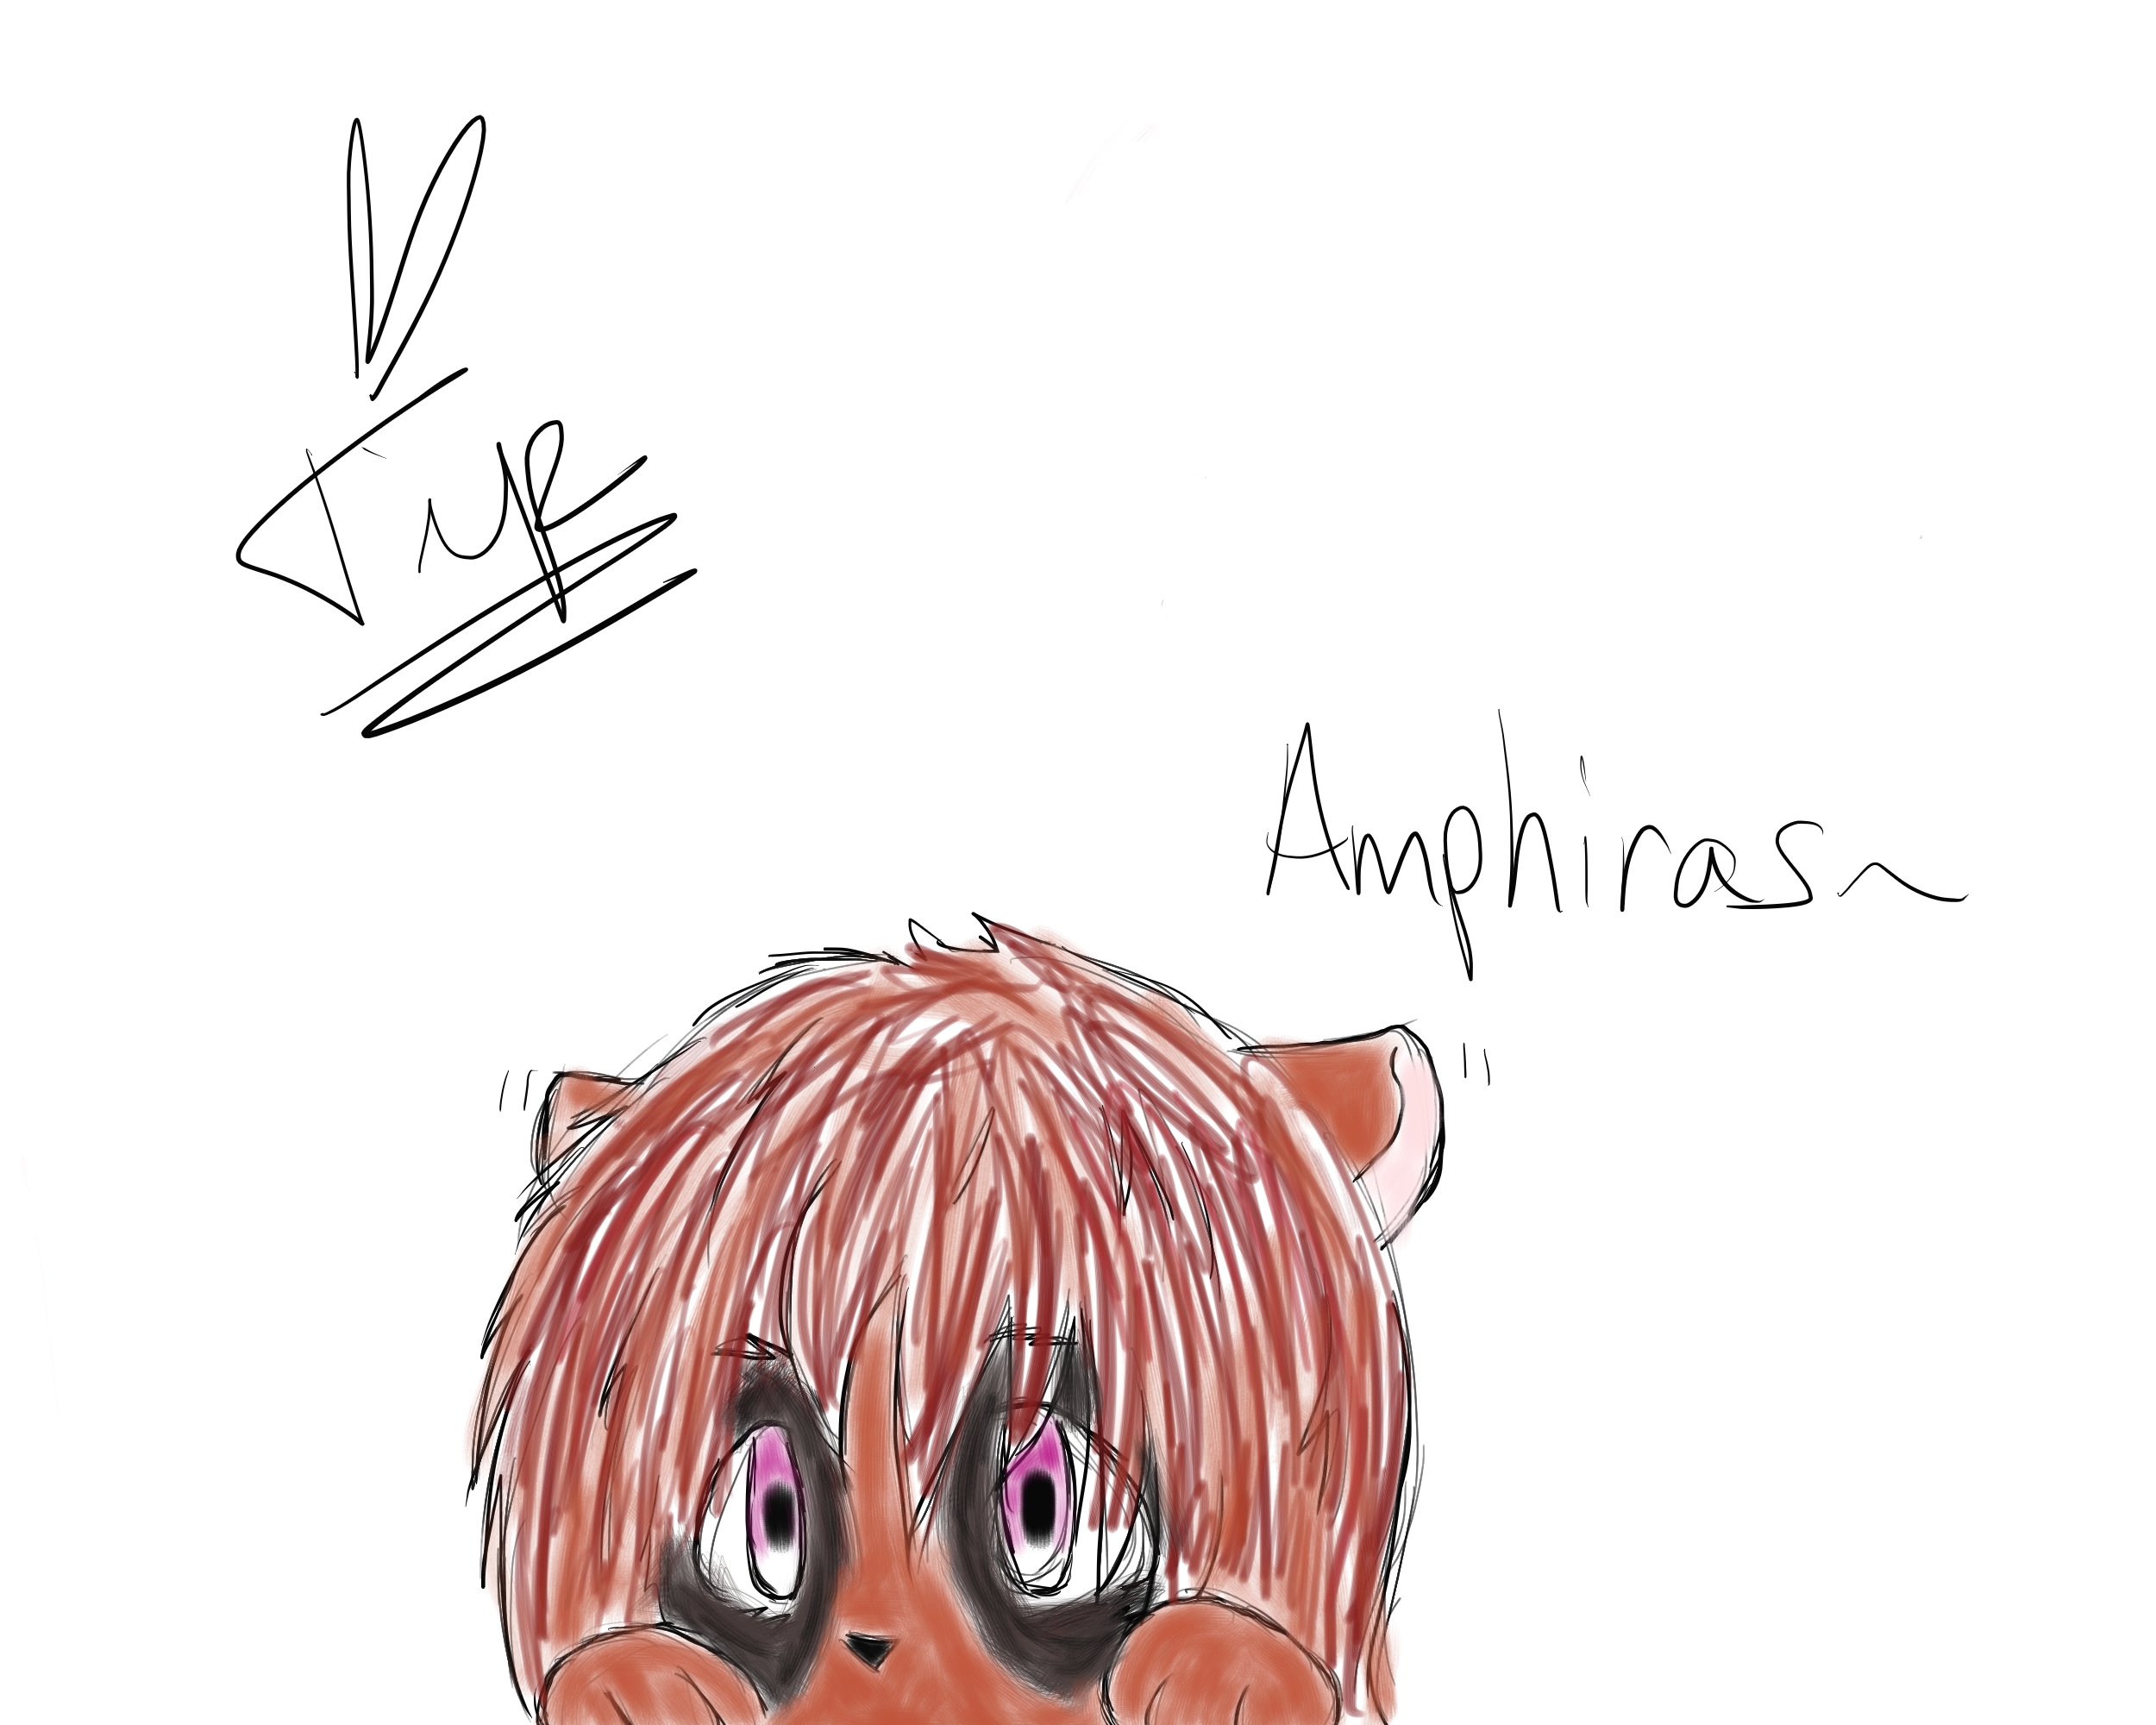 Amphiras